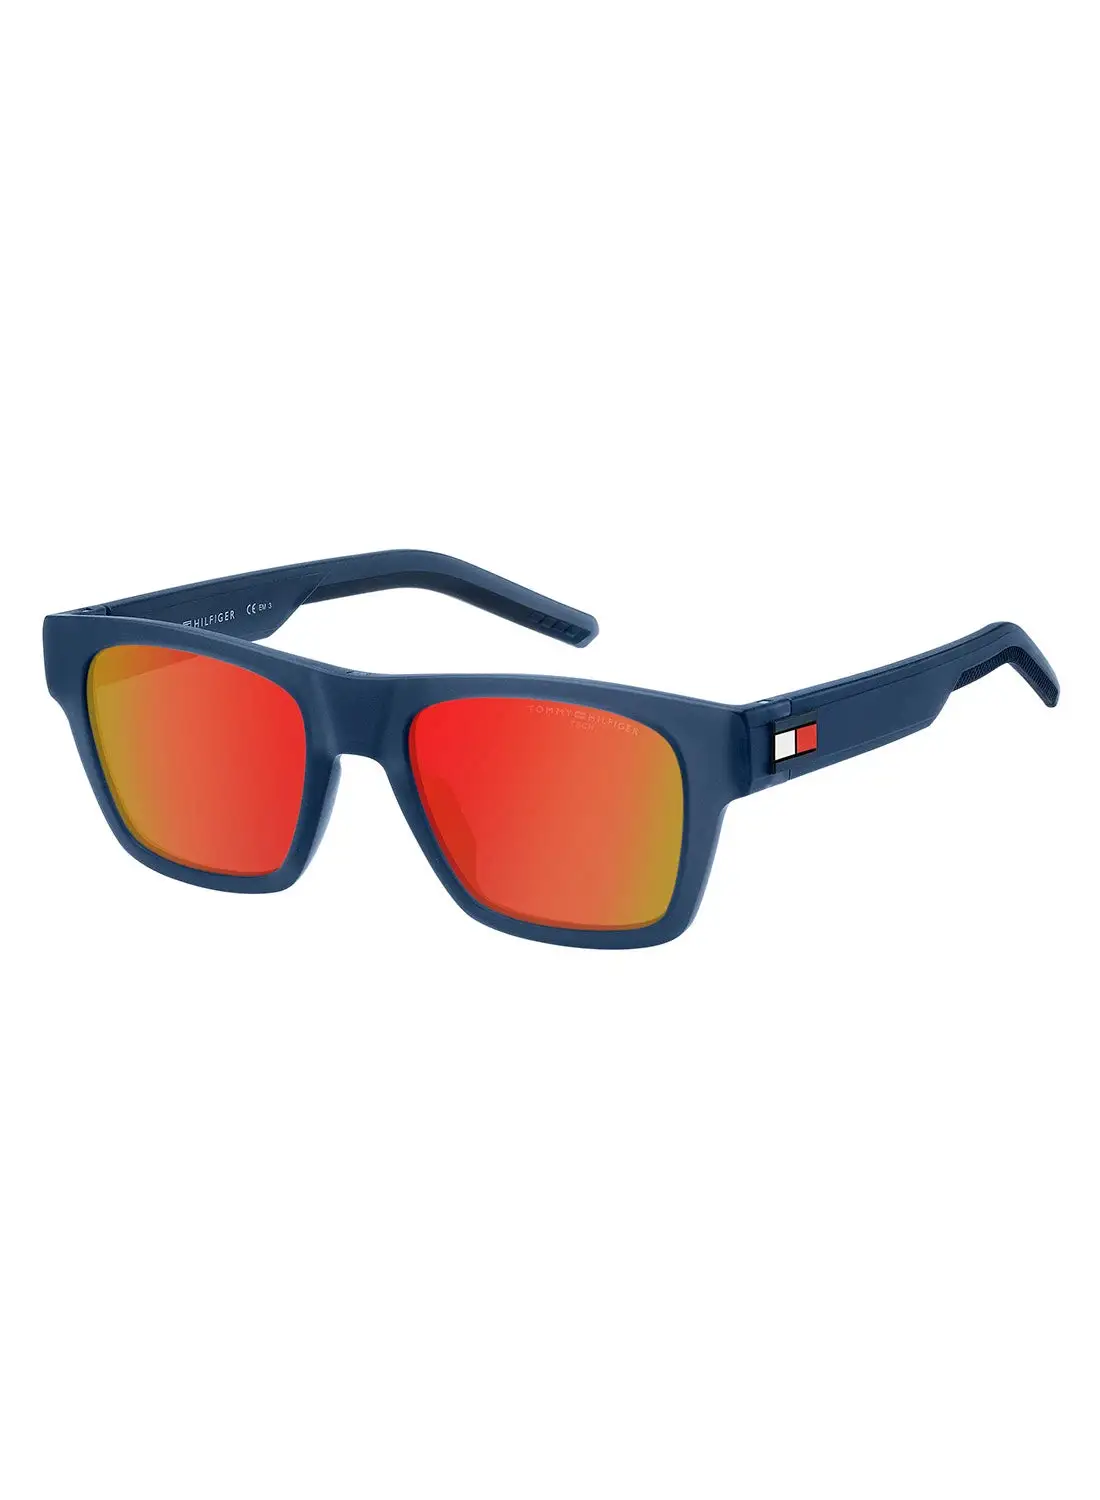 TOMMY HILFIGER Men's UV Protection Rectangular Sunglasses - Th 1975/S Blue Millimeter - Lens Size: 51 Mm